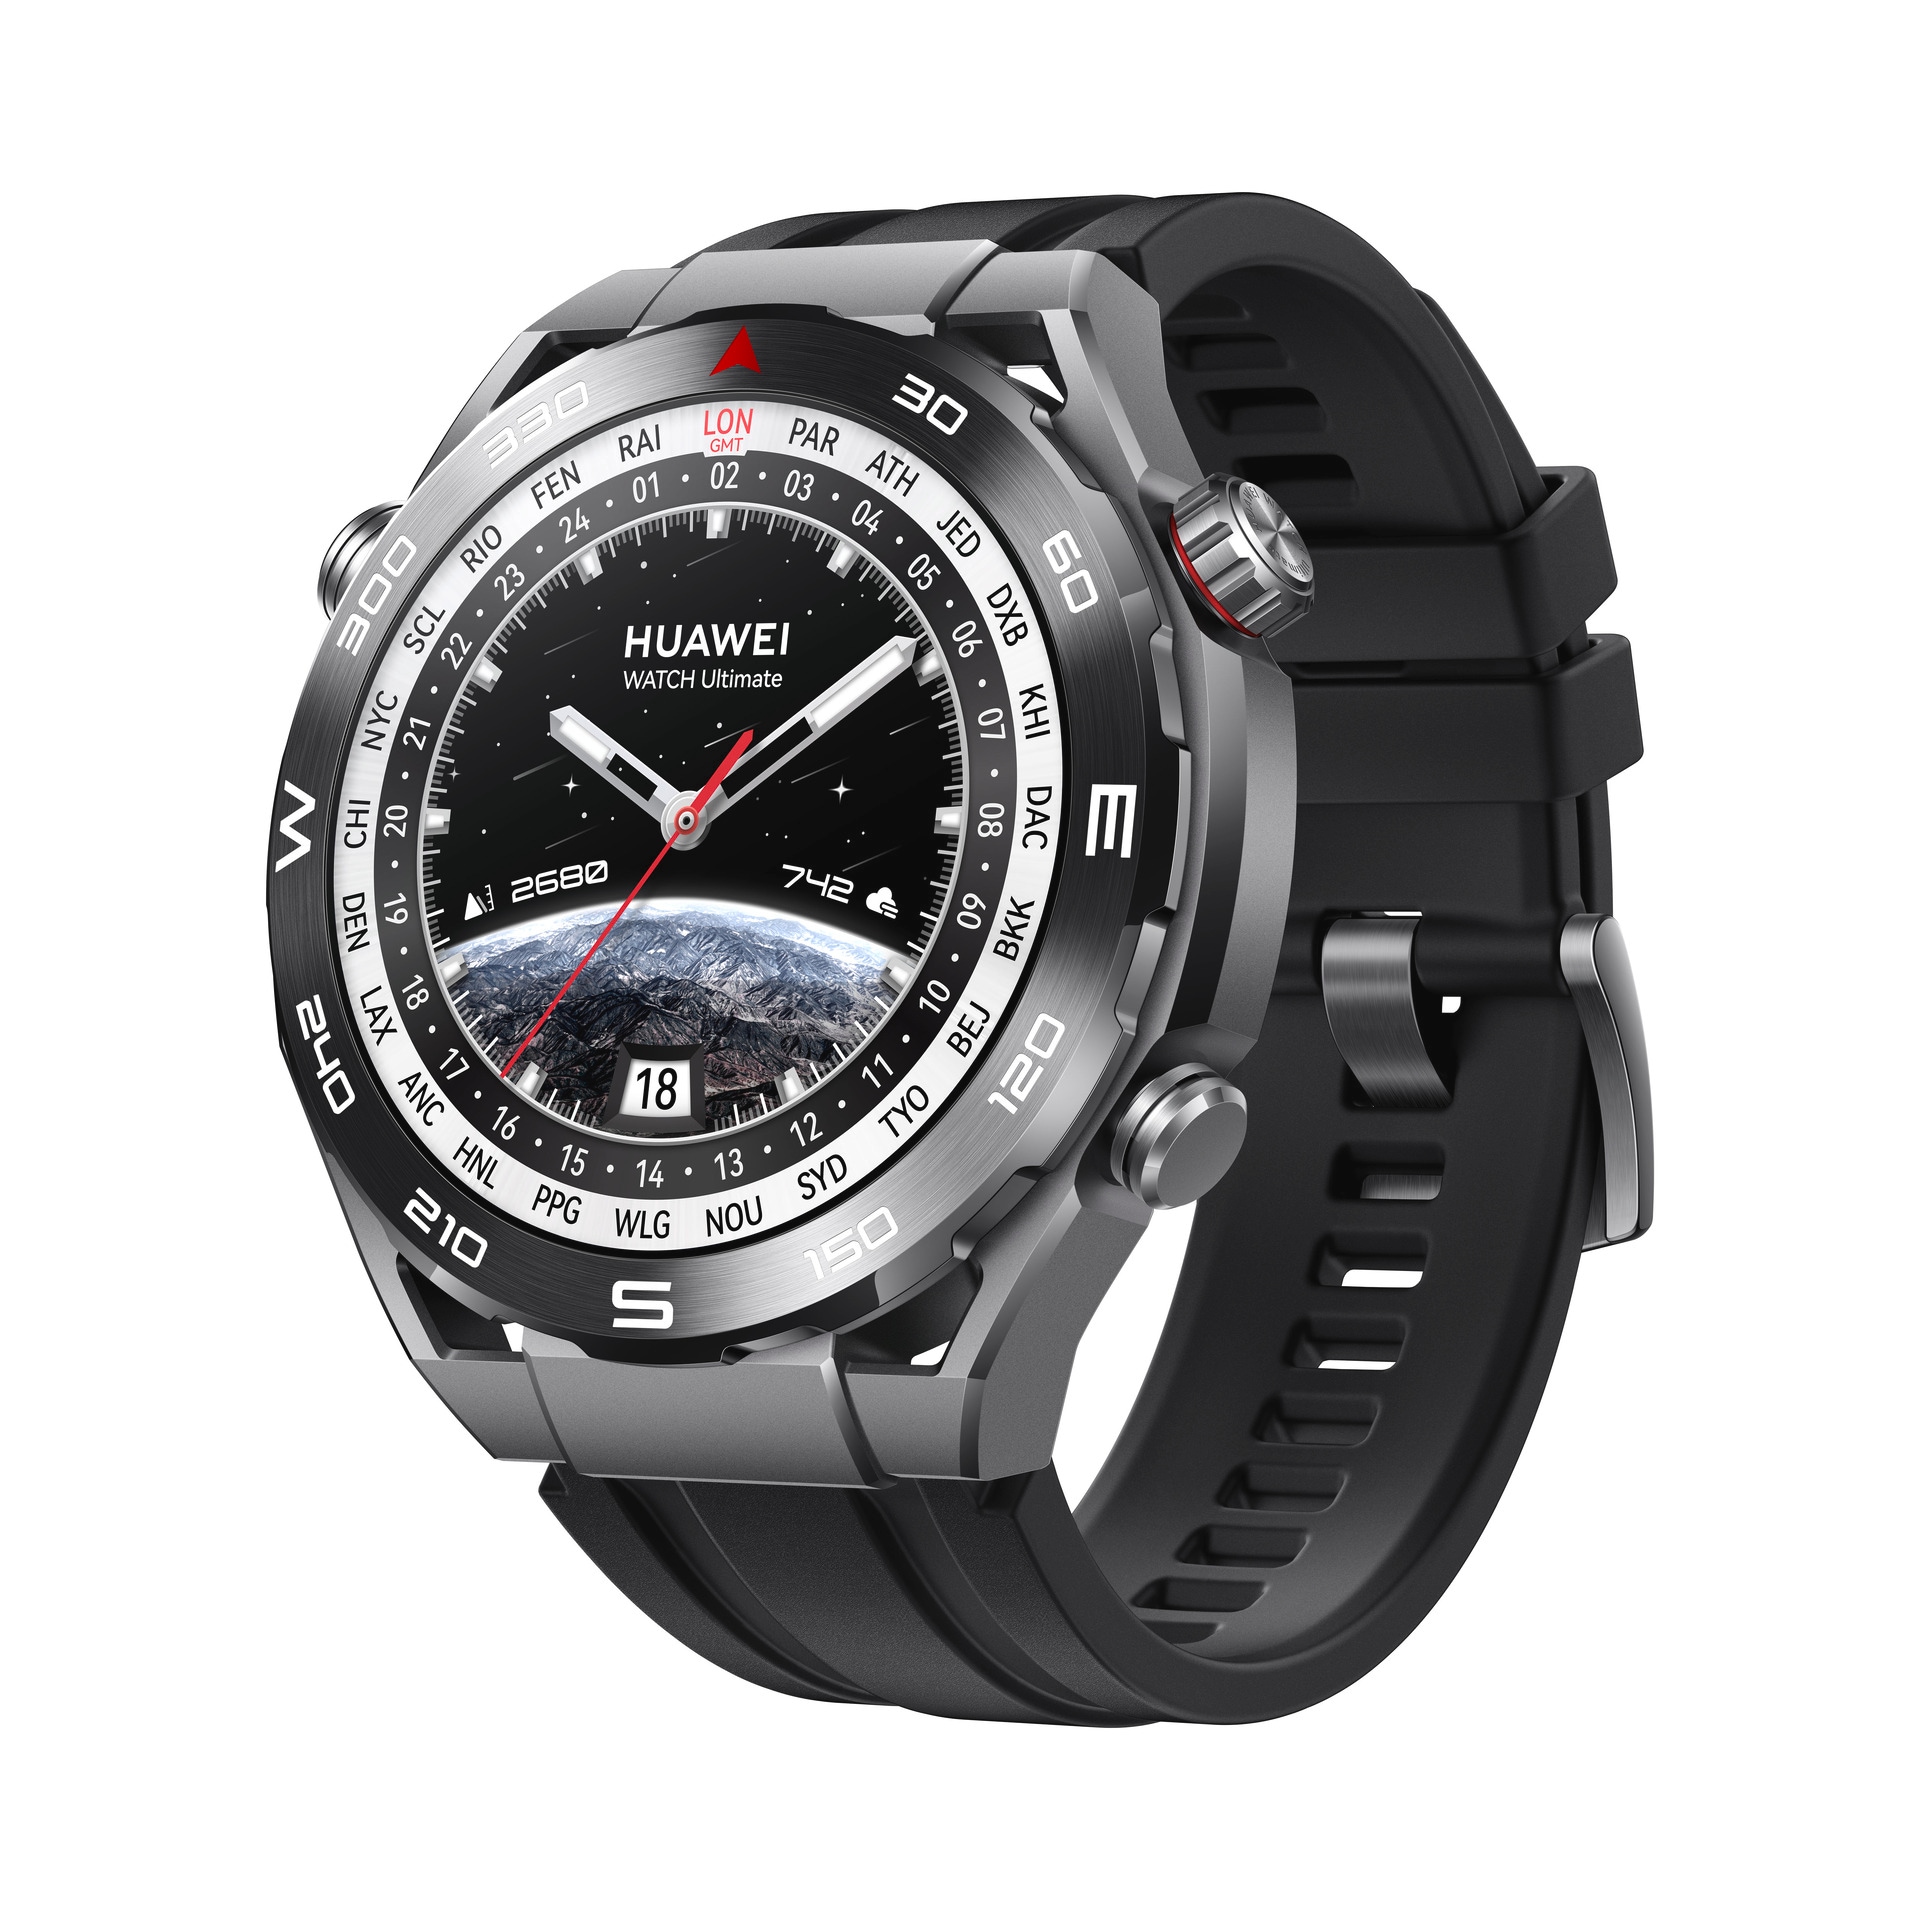 Smartwatch »Watch Ultimate«, (Proprietär)